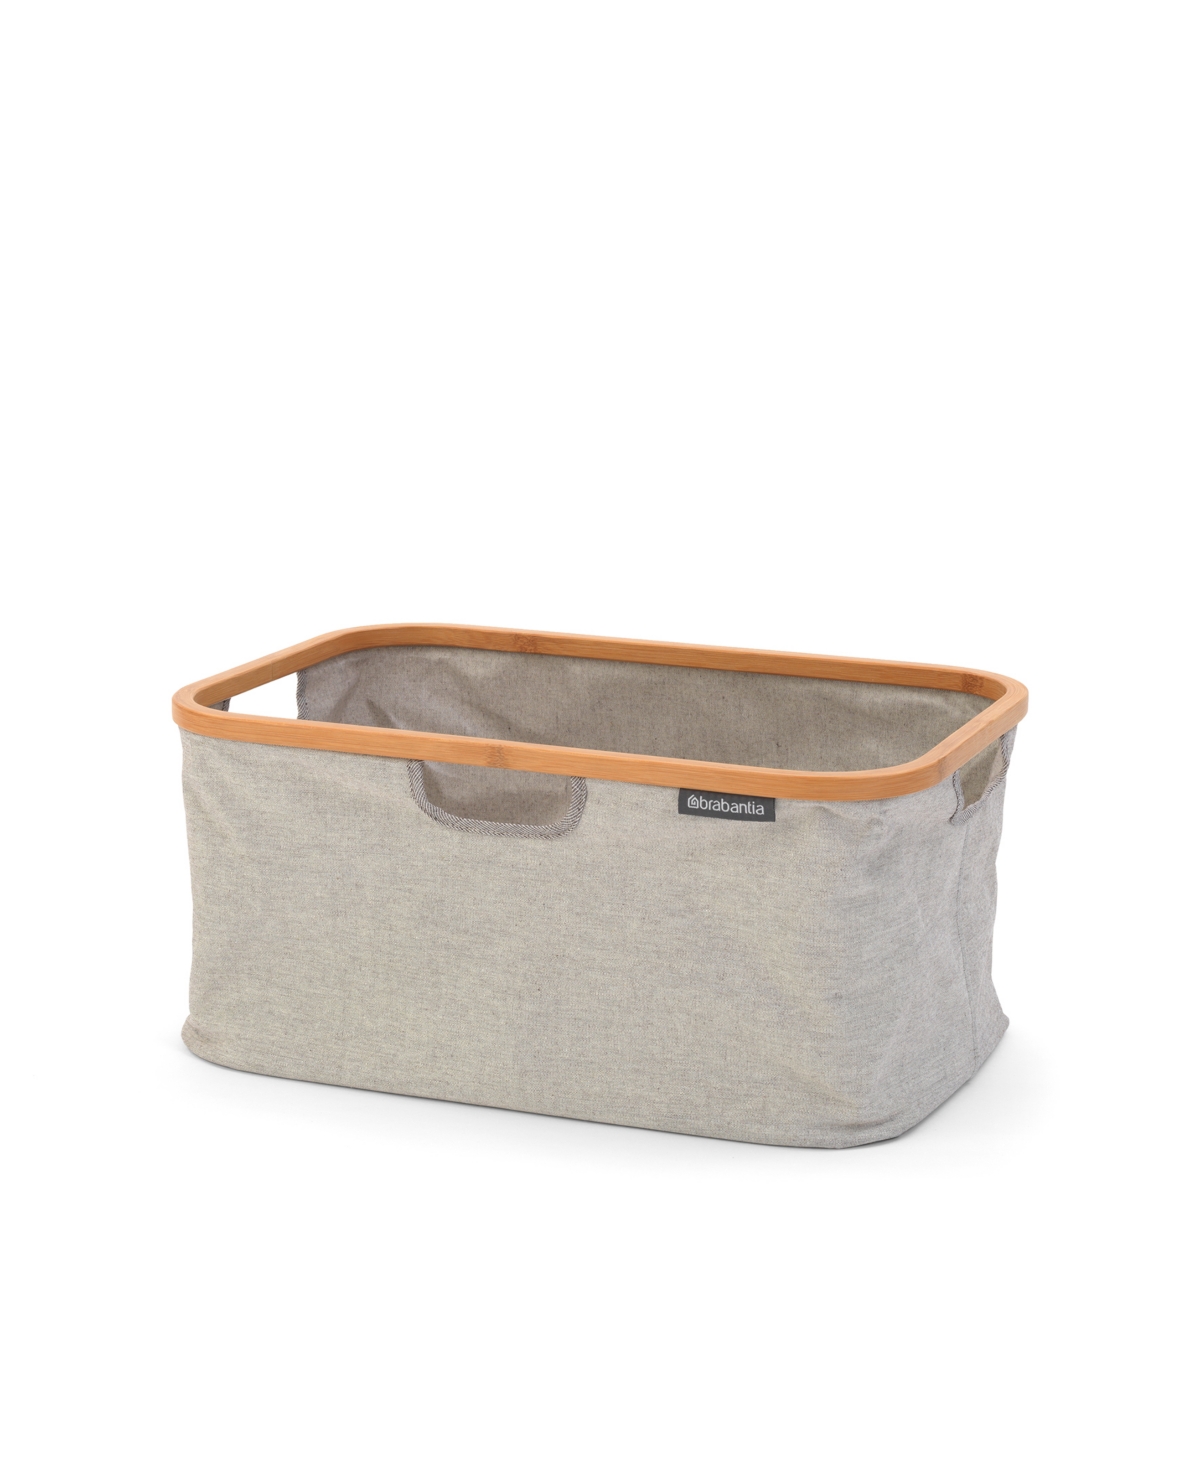 Brabantia Foldable Laundry Basket, Gray, 10.6 Gallon, 40 Liter